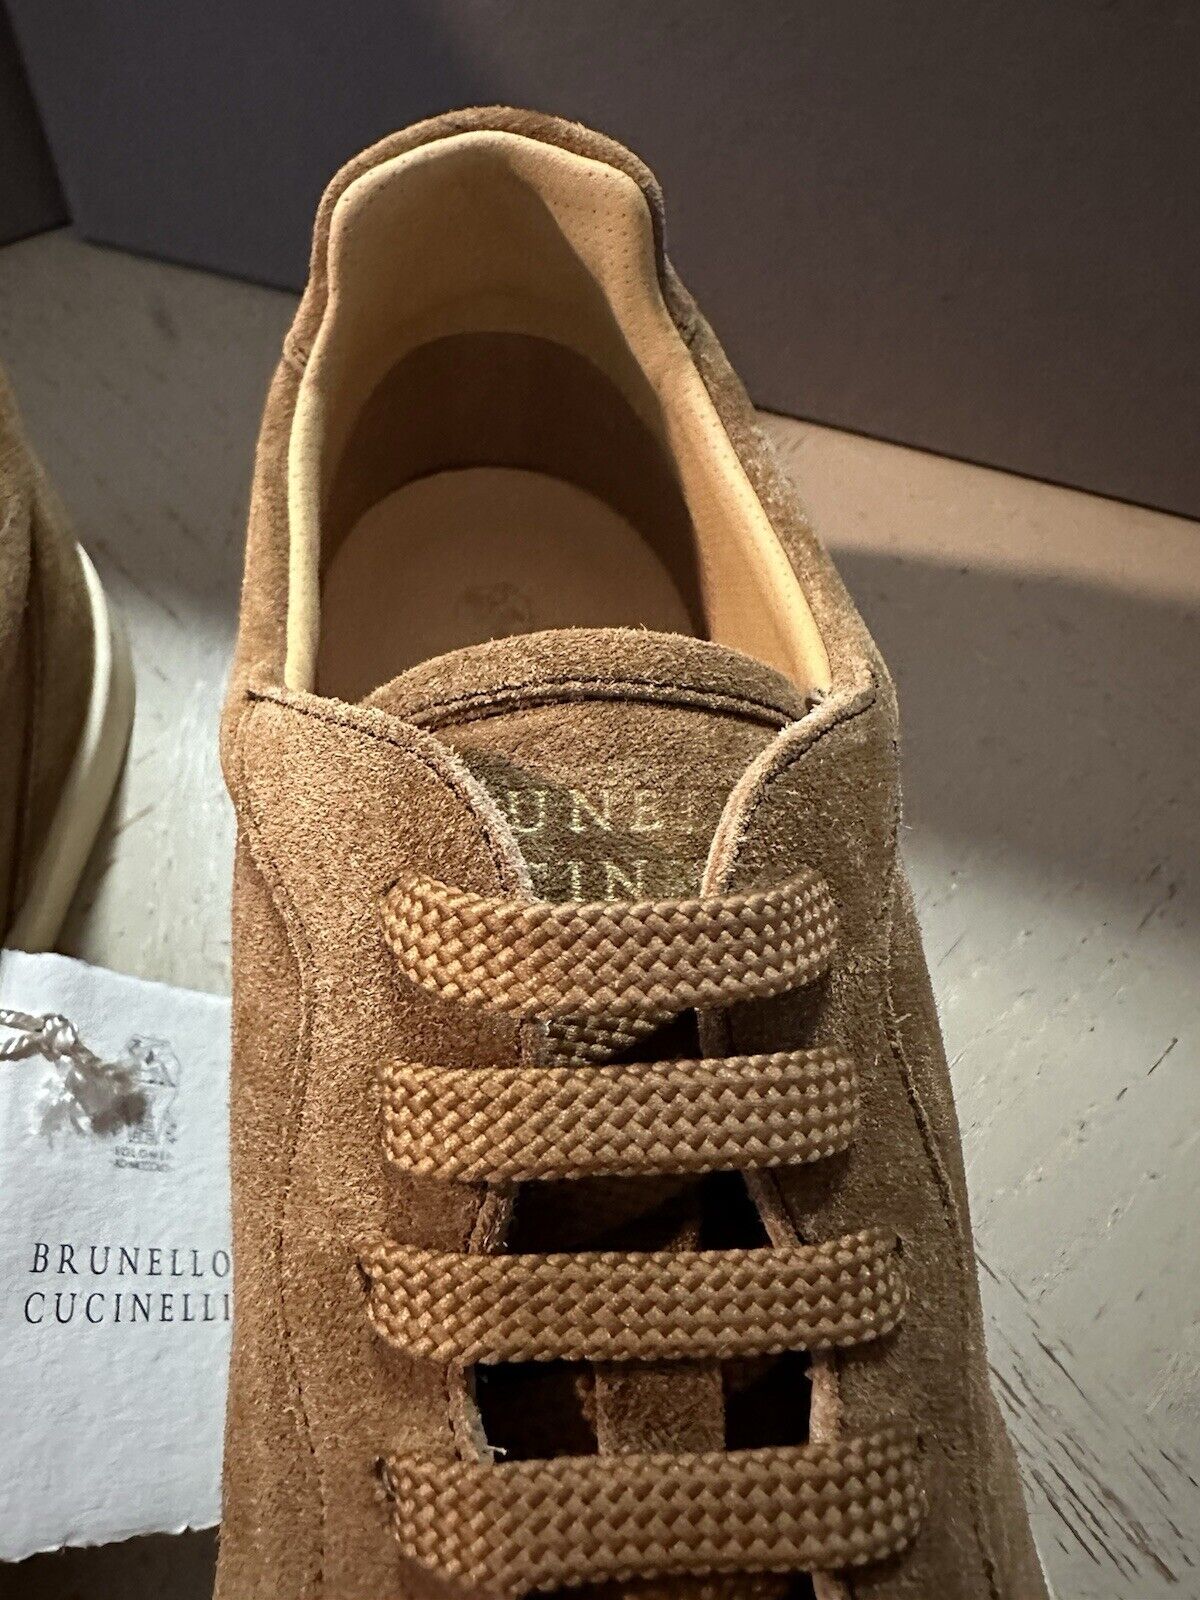 Brunello Cucinelli Men Suede Sneakers Shoes Brown 11 US/44 Eu New $950